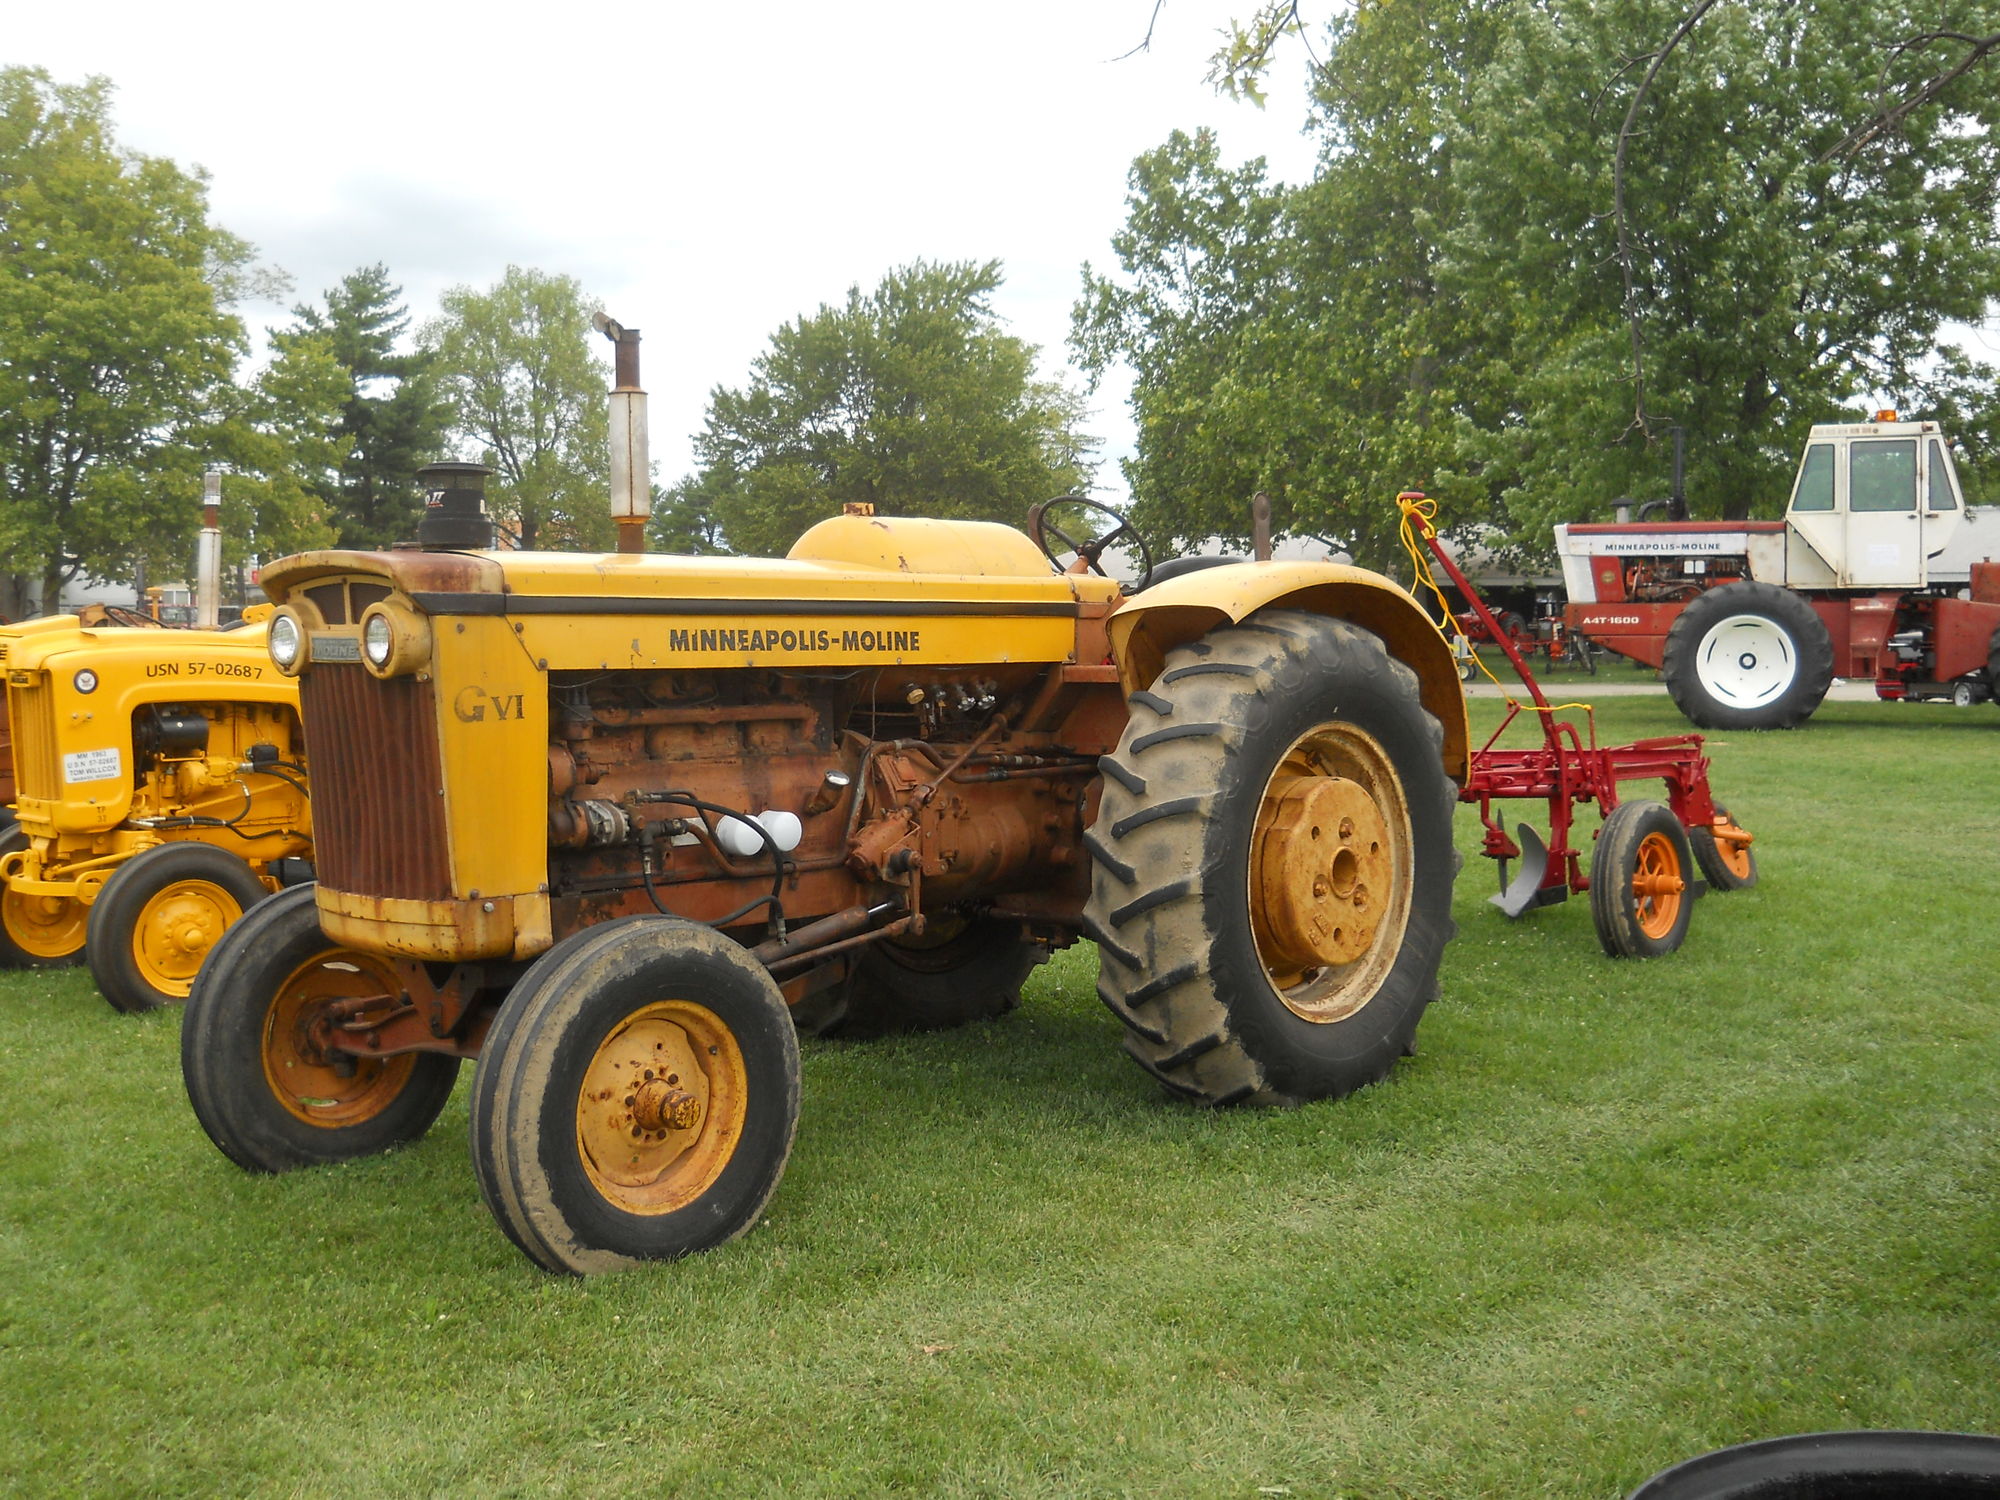 Minneapolis-Moline GVI LP | Tractor & Construction Plant Wiki | Fandom ...